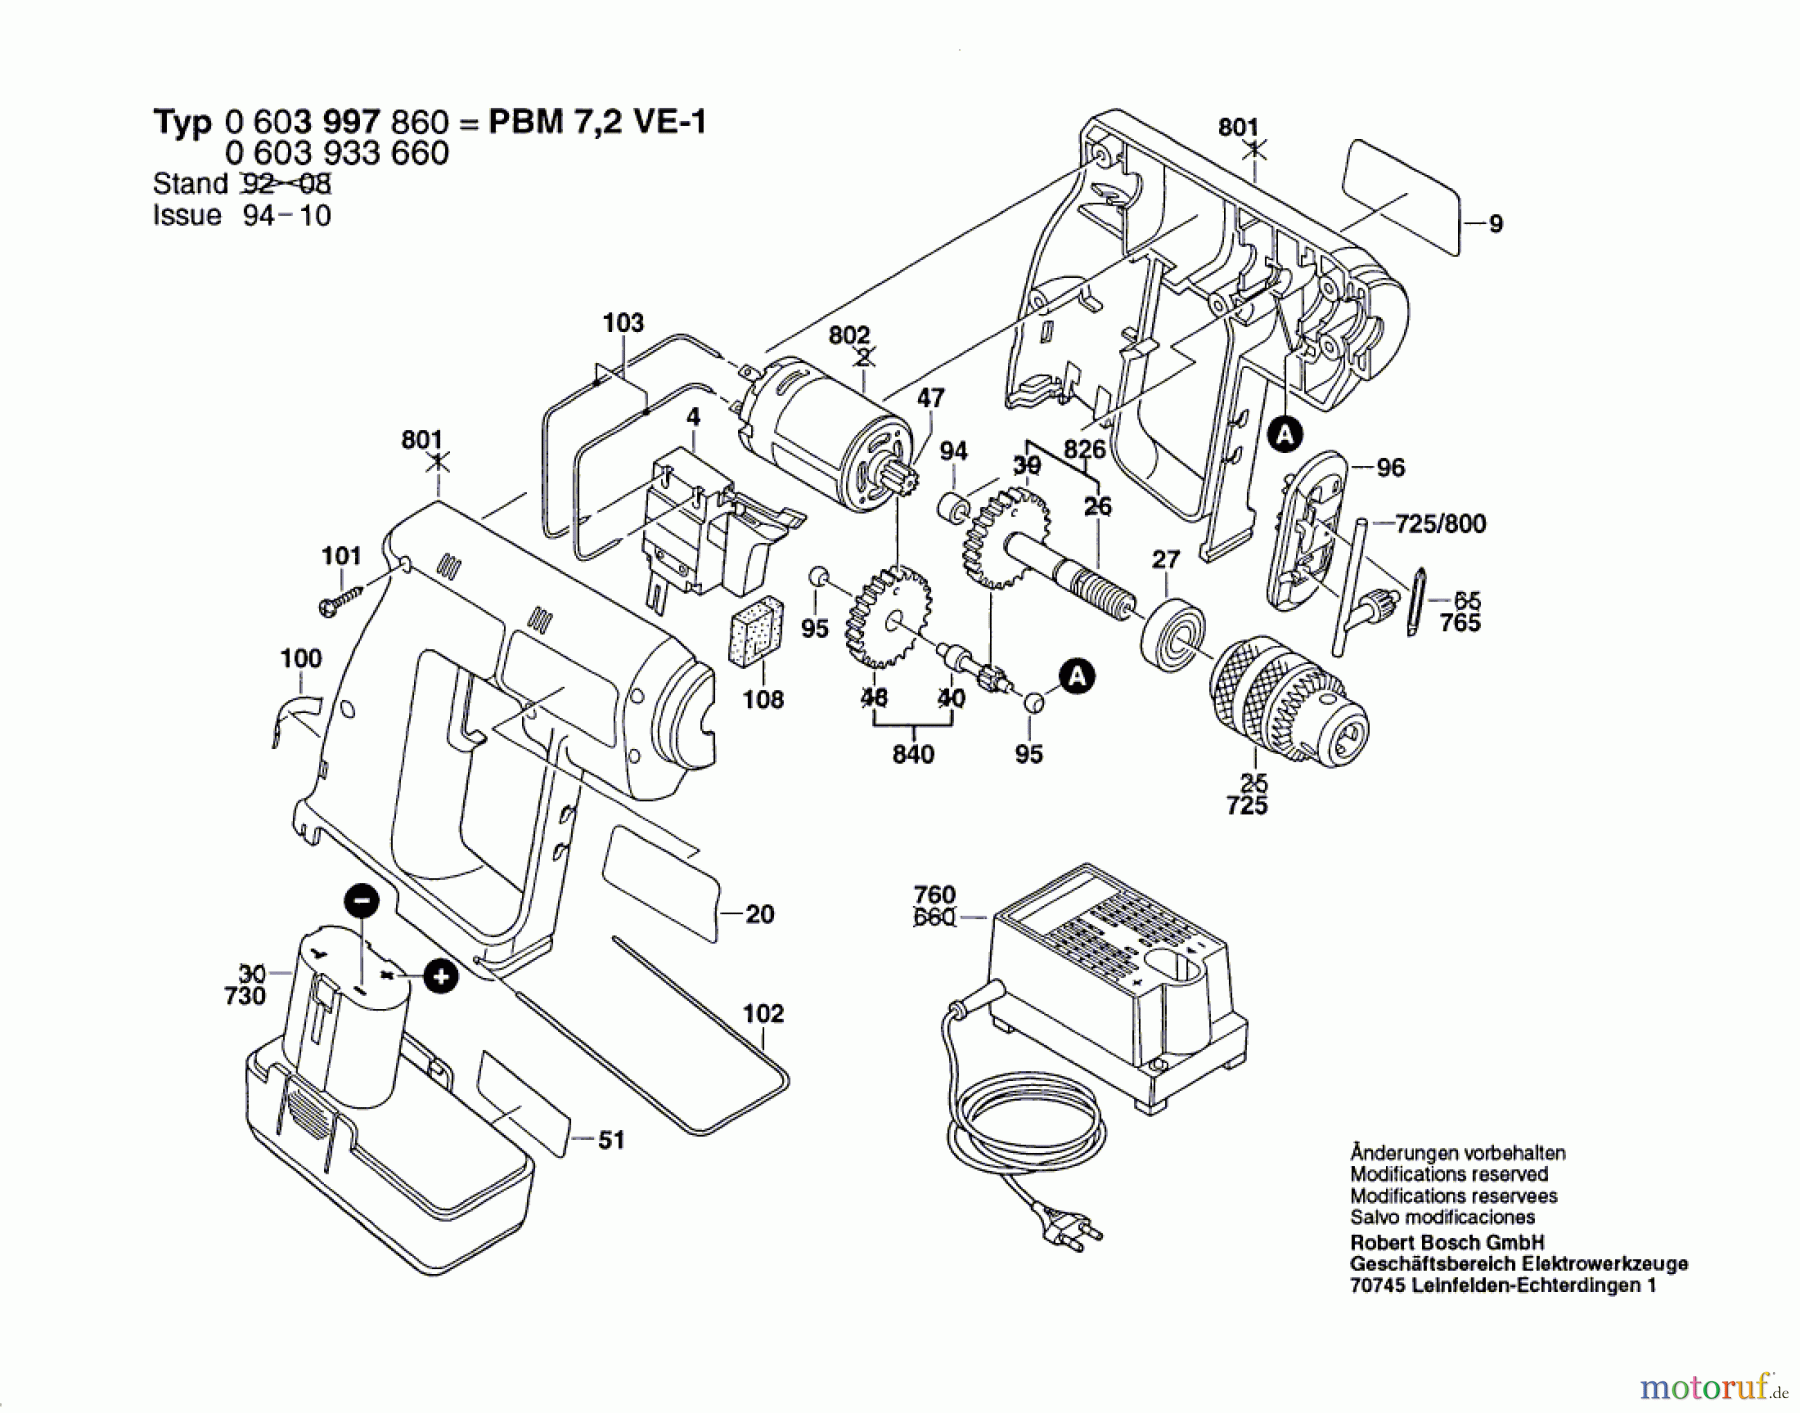  Bosch Akku Werkzeug Akku-Bohrmaschine PBM 7,2 VE-1 Seite 1